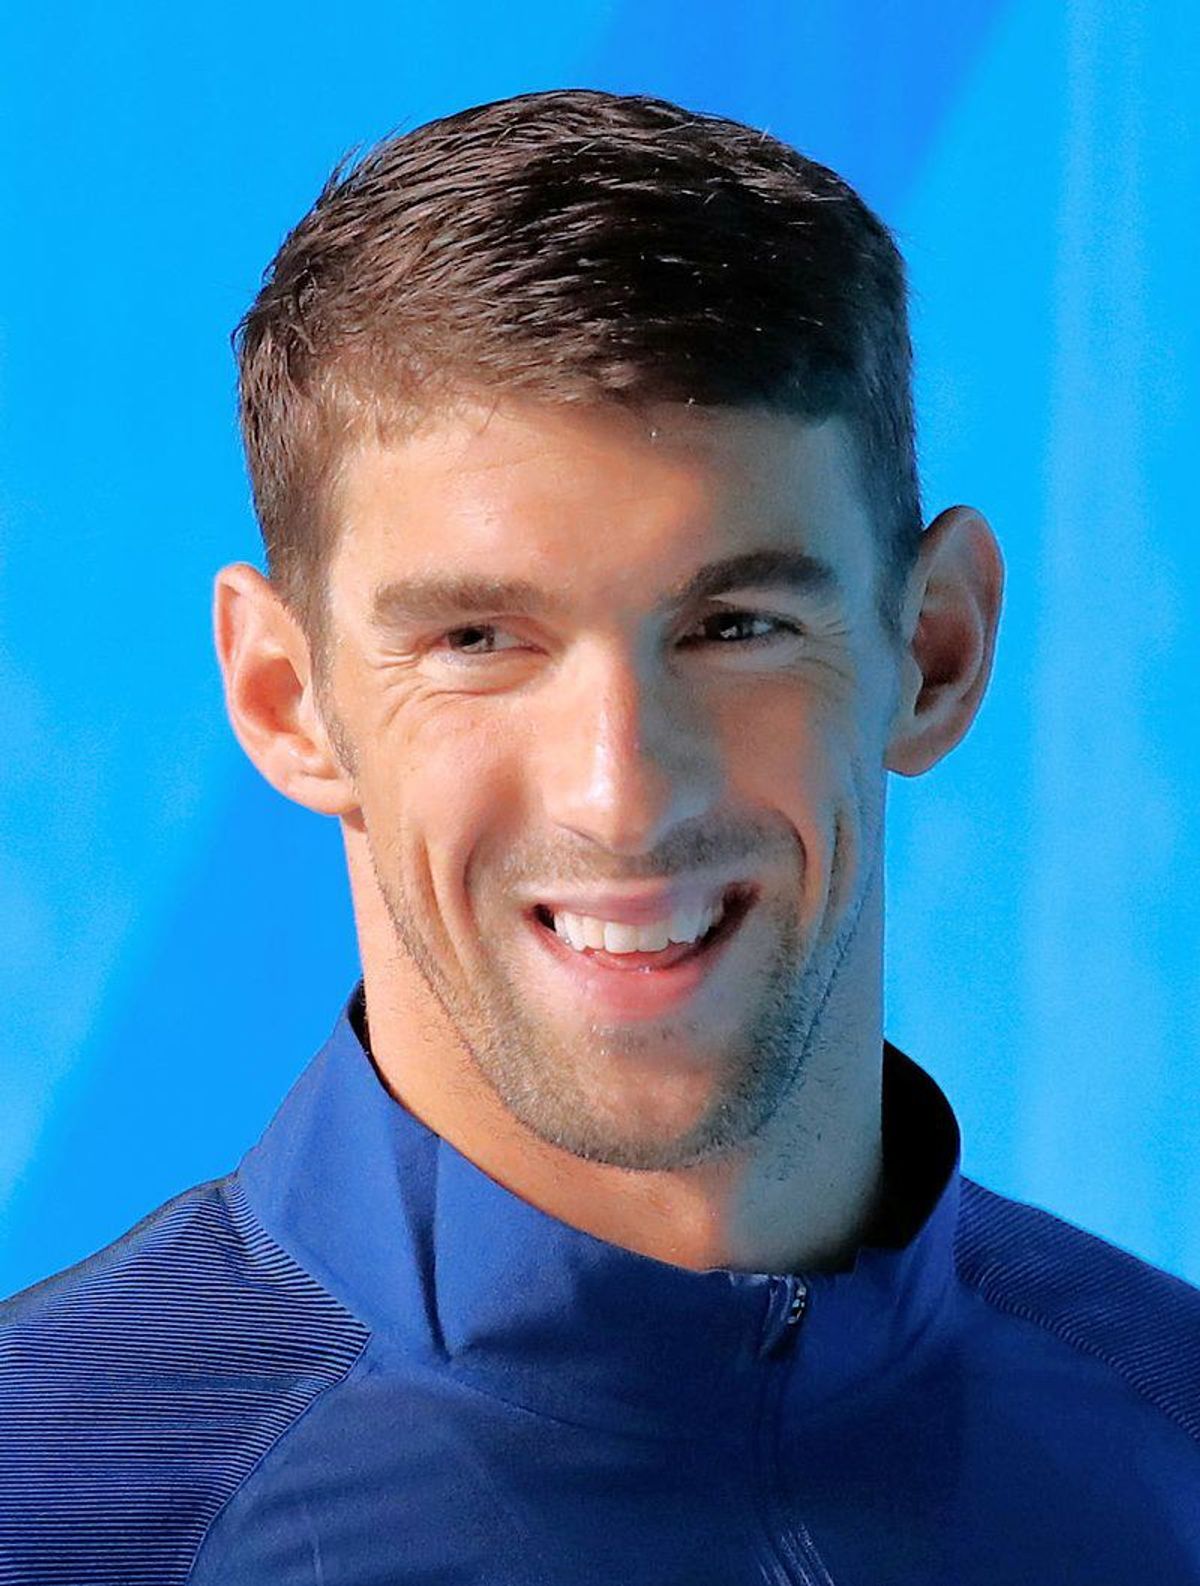 Michael Phelps: The Goat?